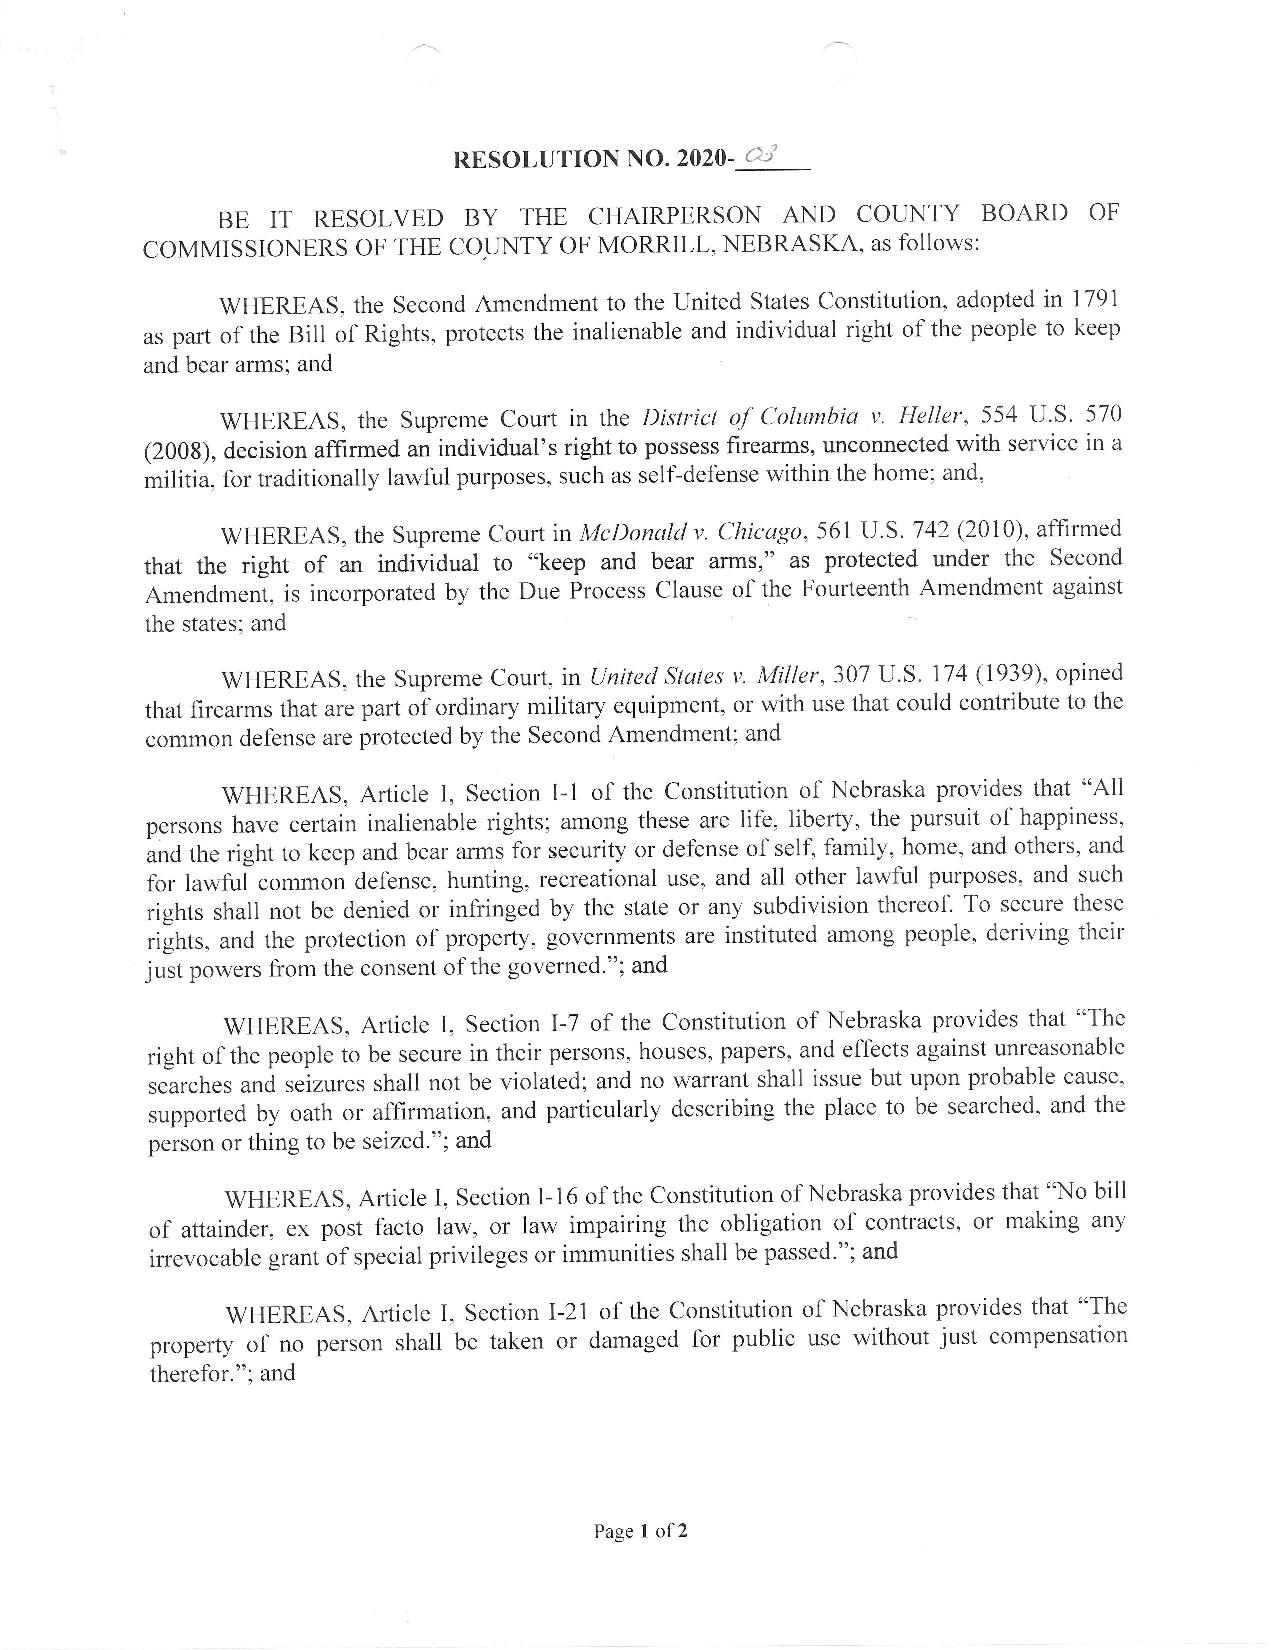 Morrill County Nebraska 2nd Amendment Resolution Page 1